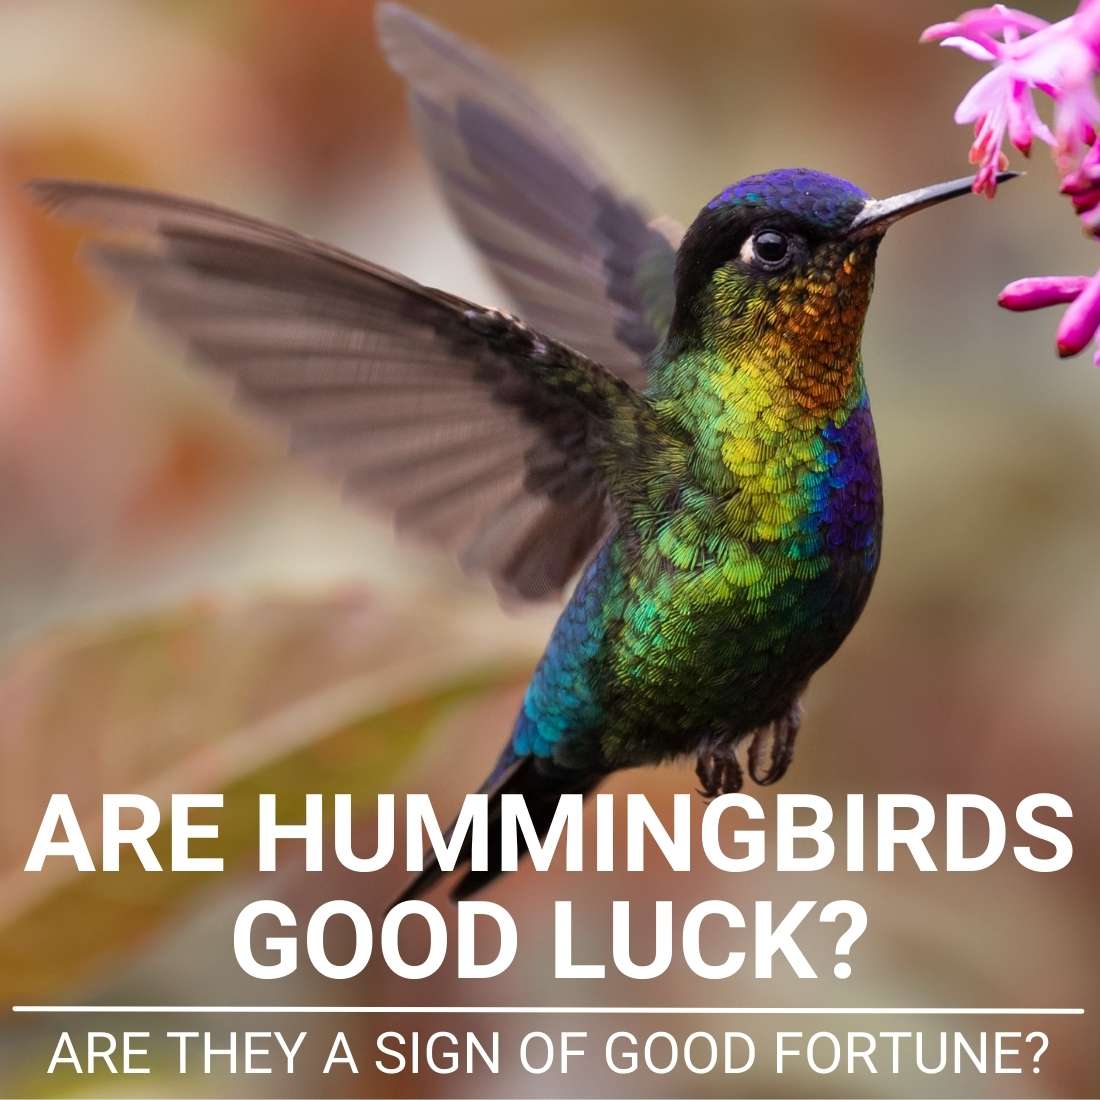 Are hummingbirds good luck